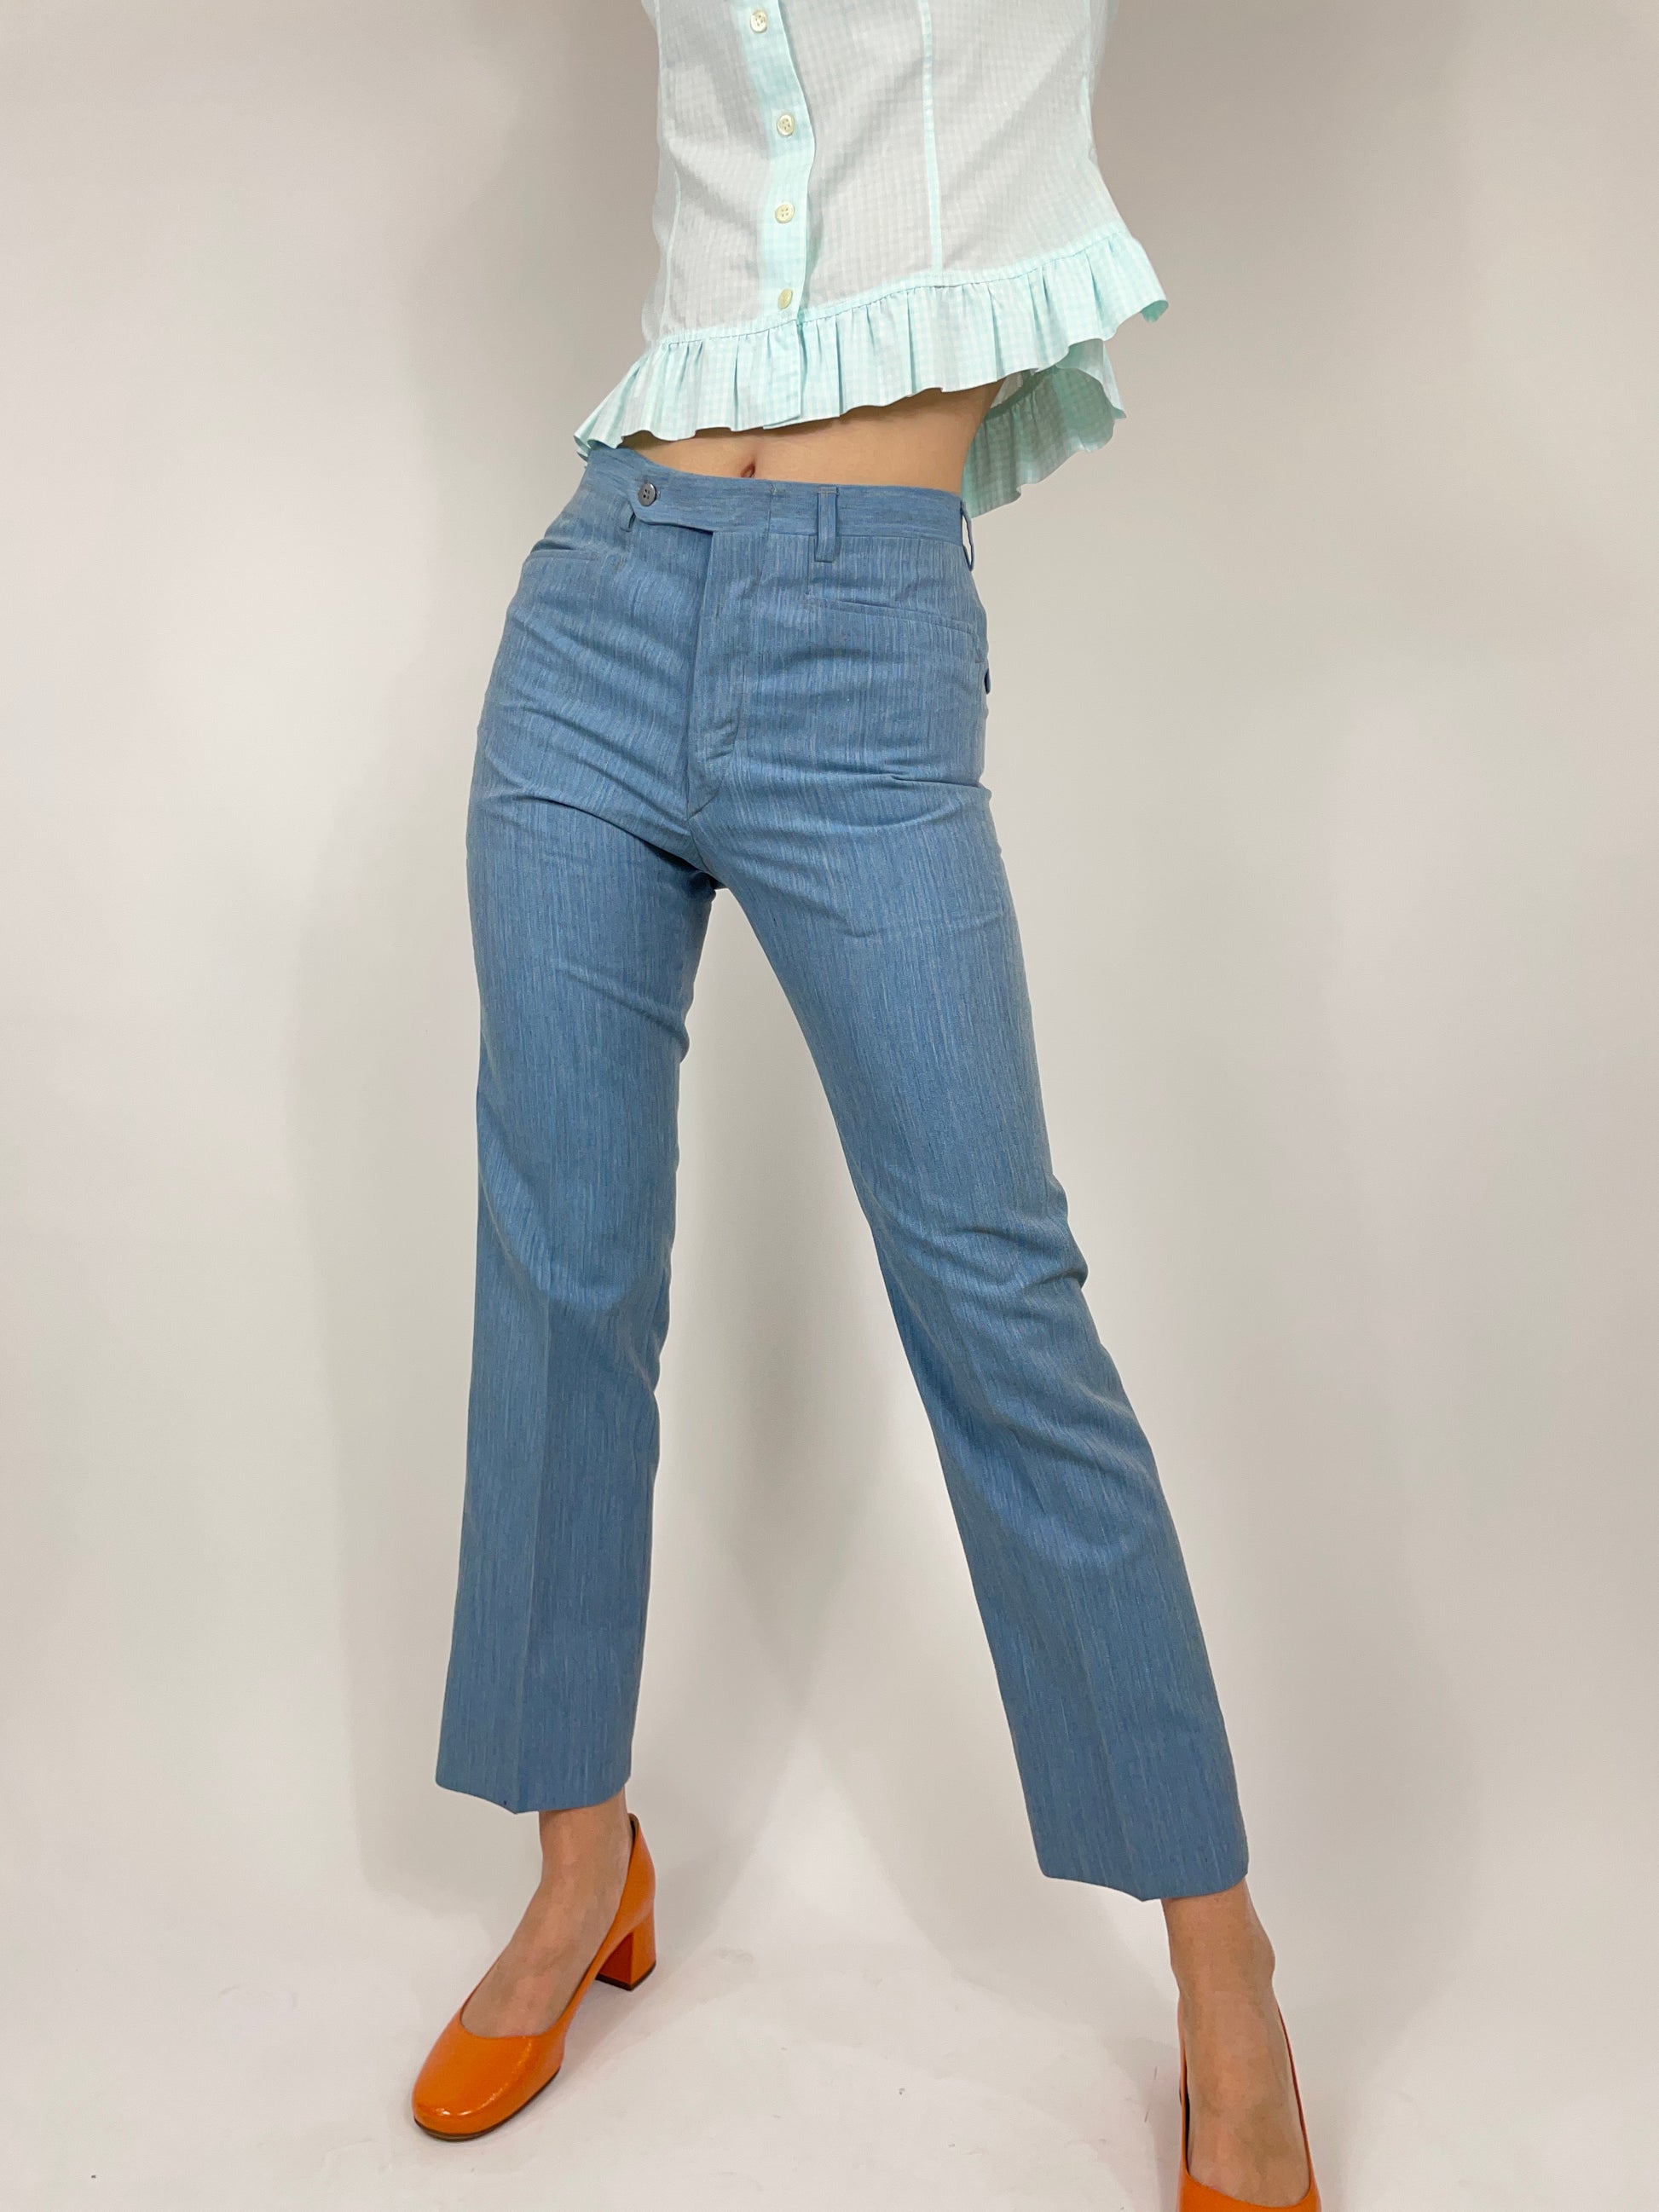 pantalone-da-donna-vintage-estivo-colore-celeste